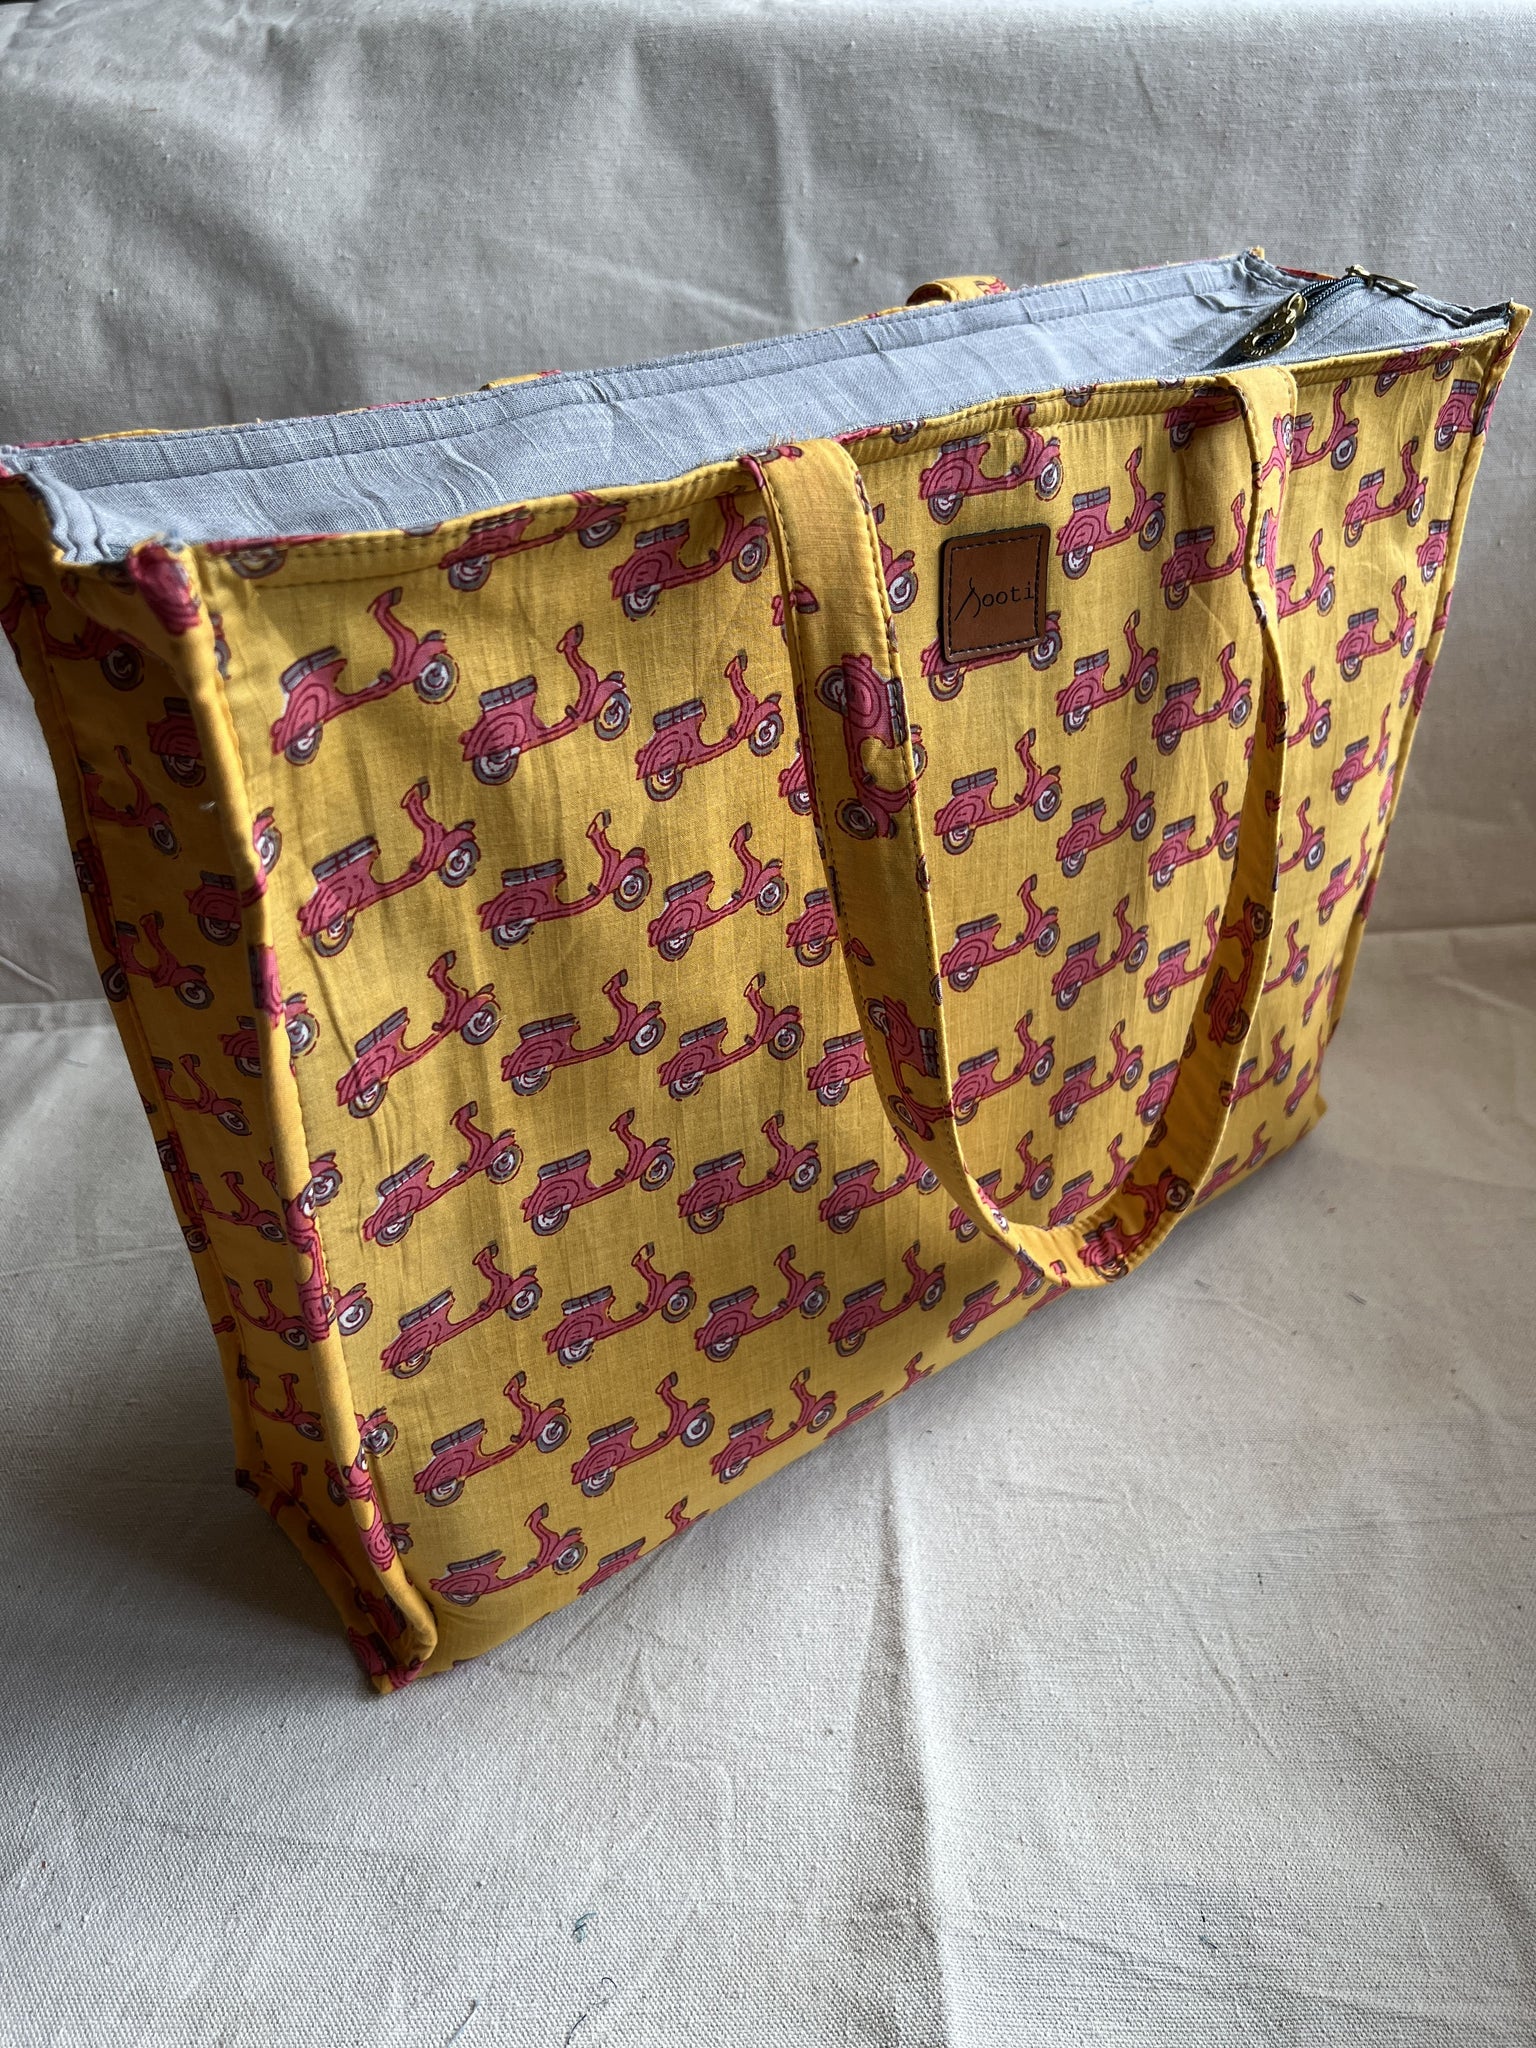 Japanese Woven Fabric Tote Bags | ShimaShima Bags | Stylish Tote Bags